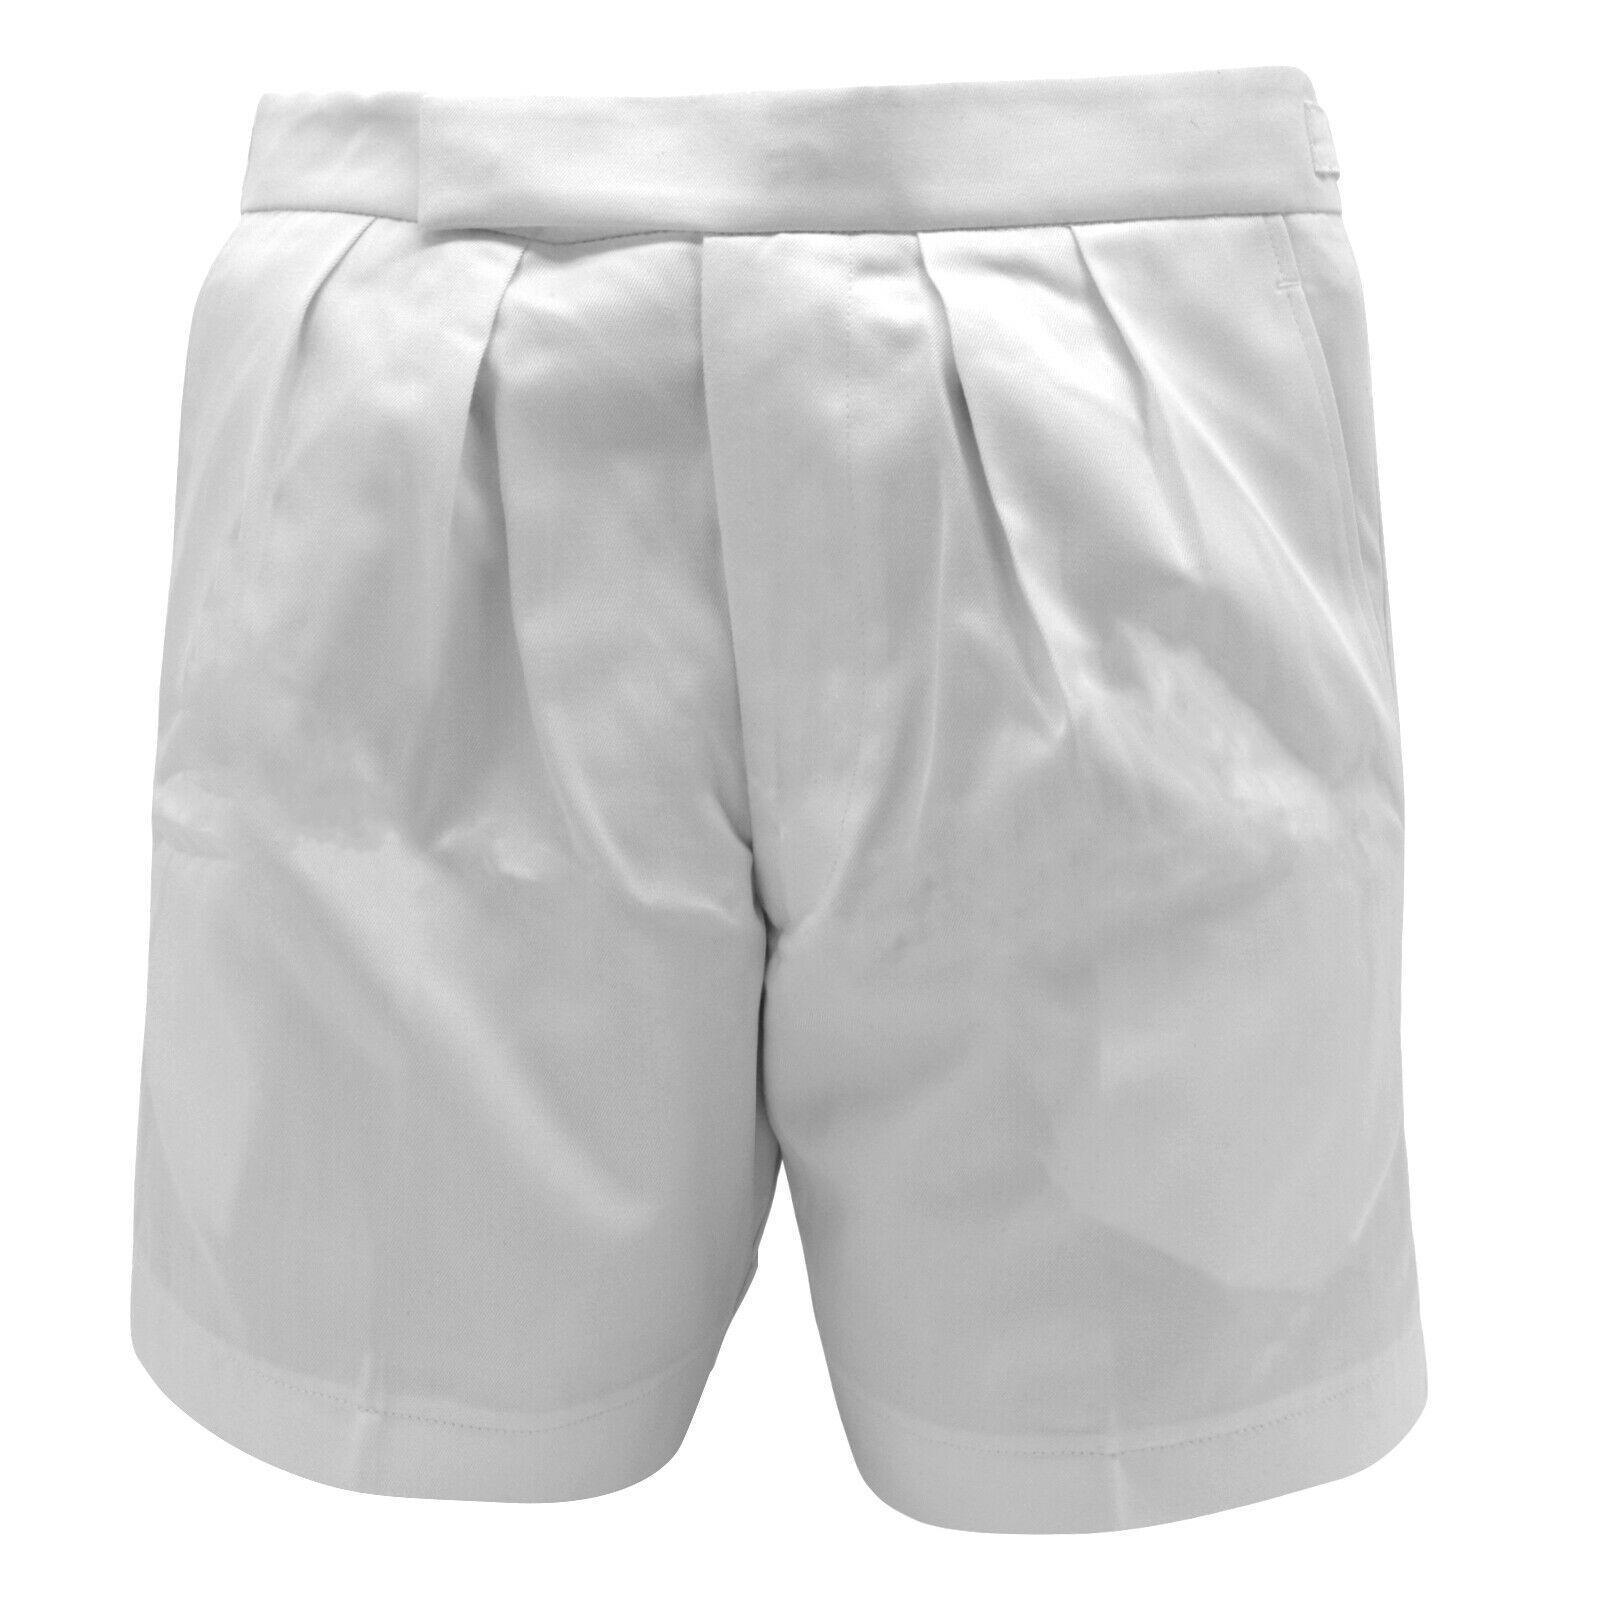 White Naval Shorts